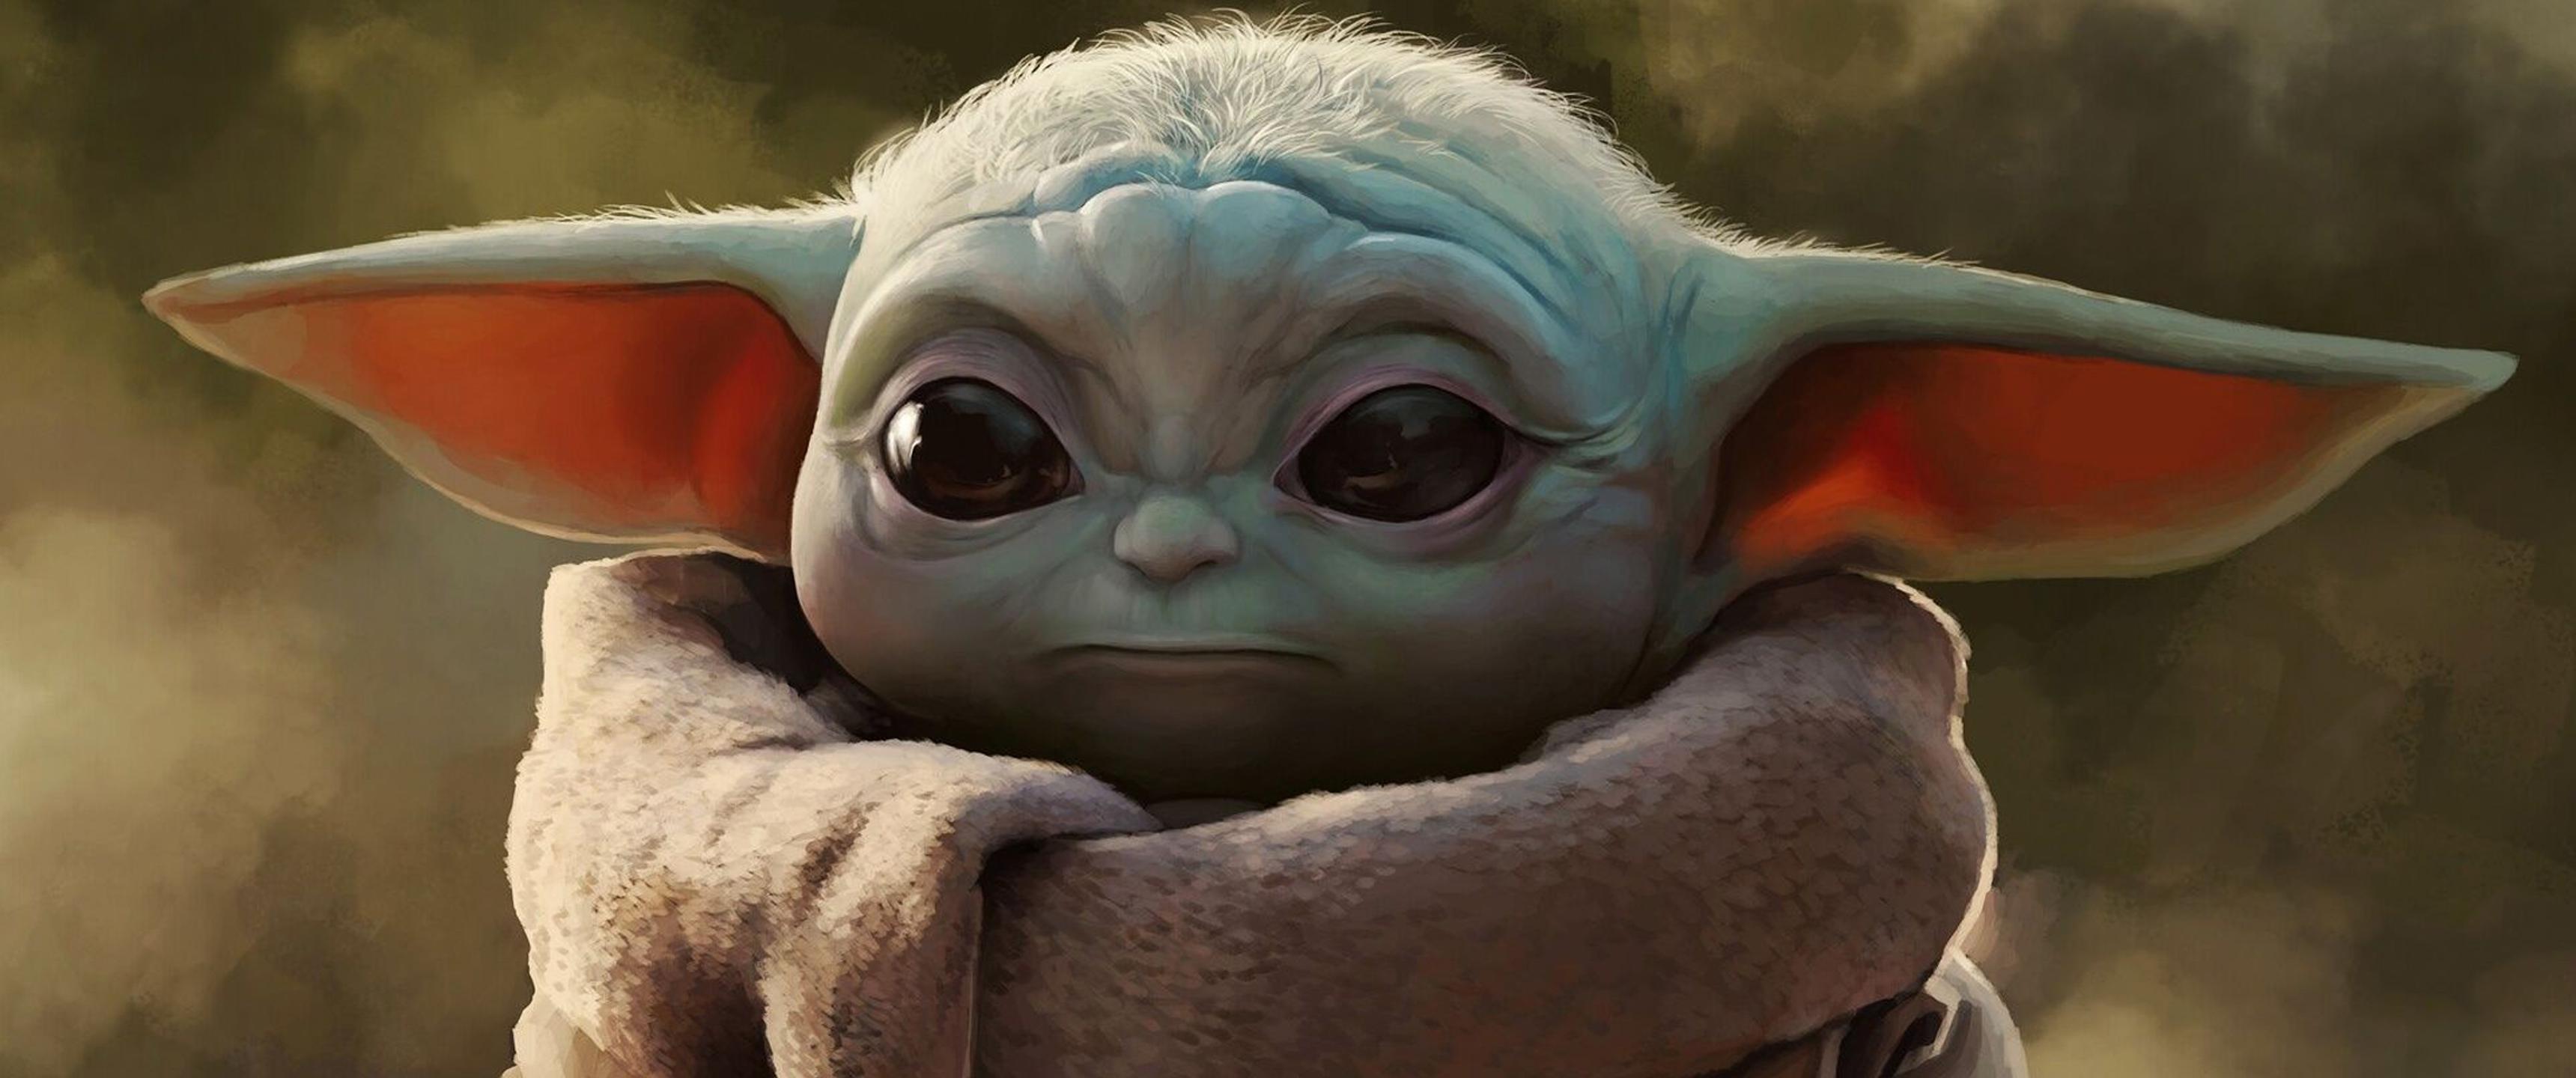 Baby Yoda (artsenpai.com) x 1440